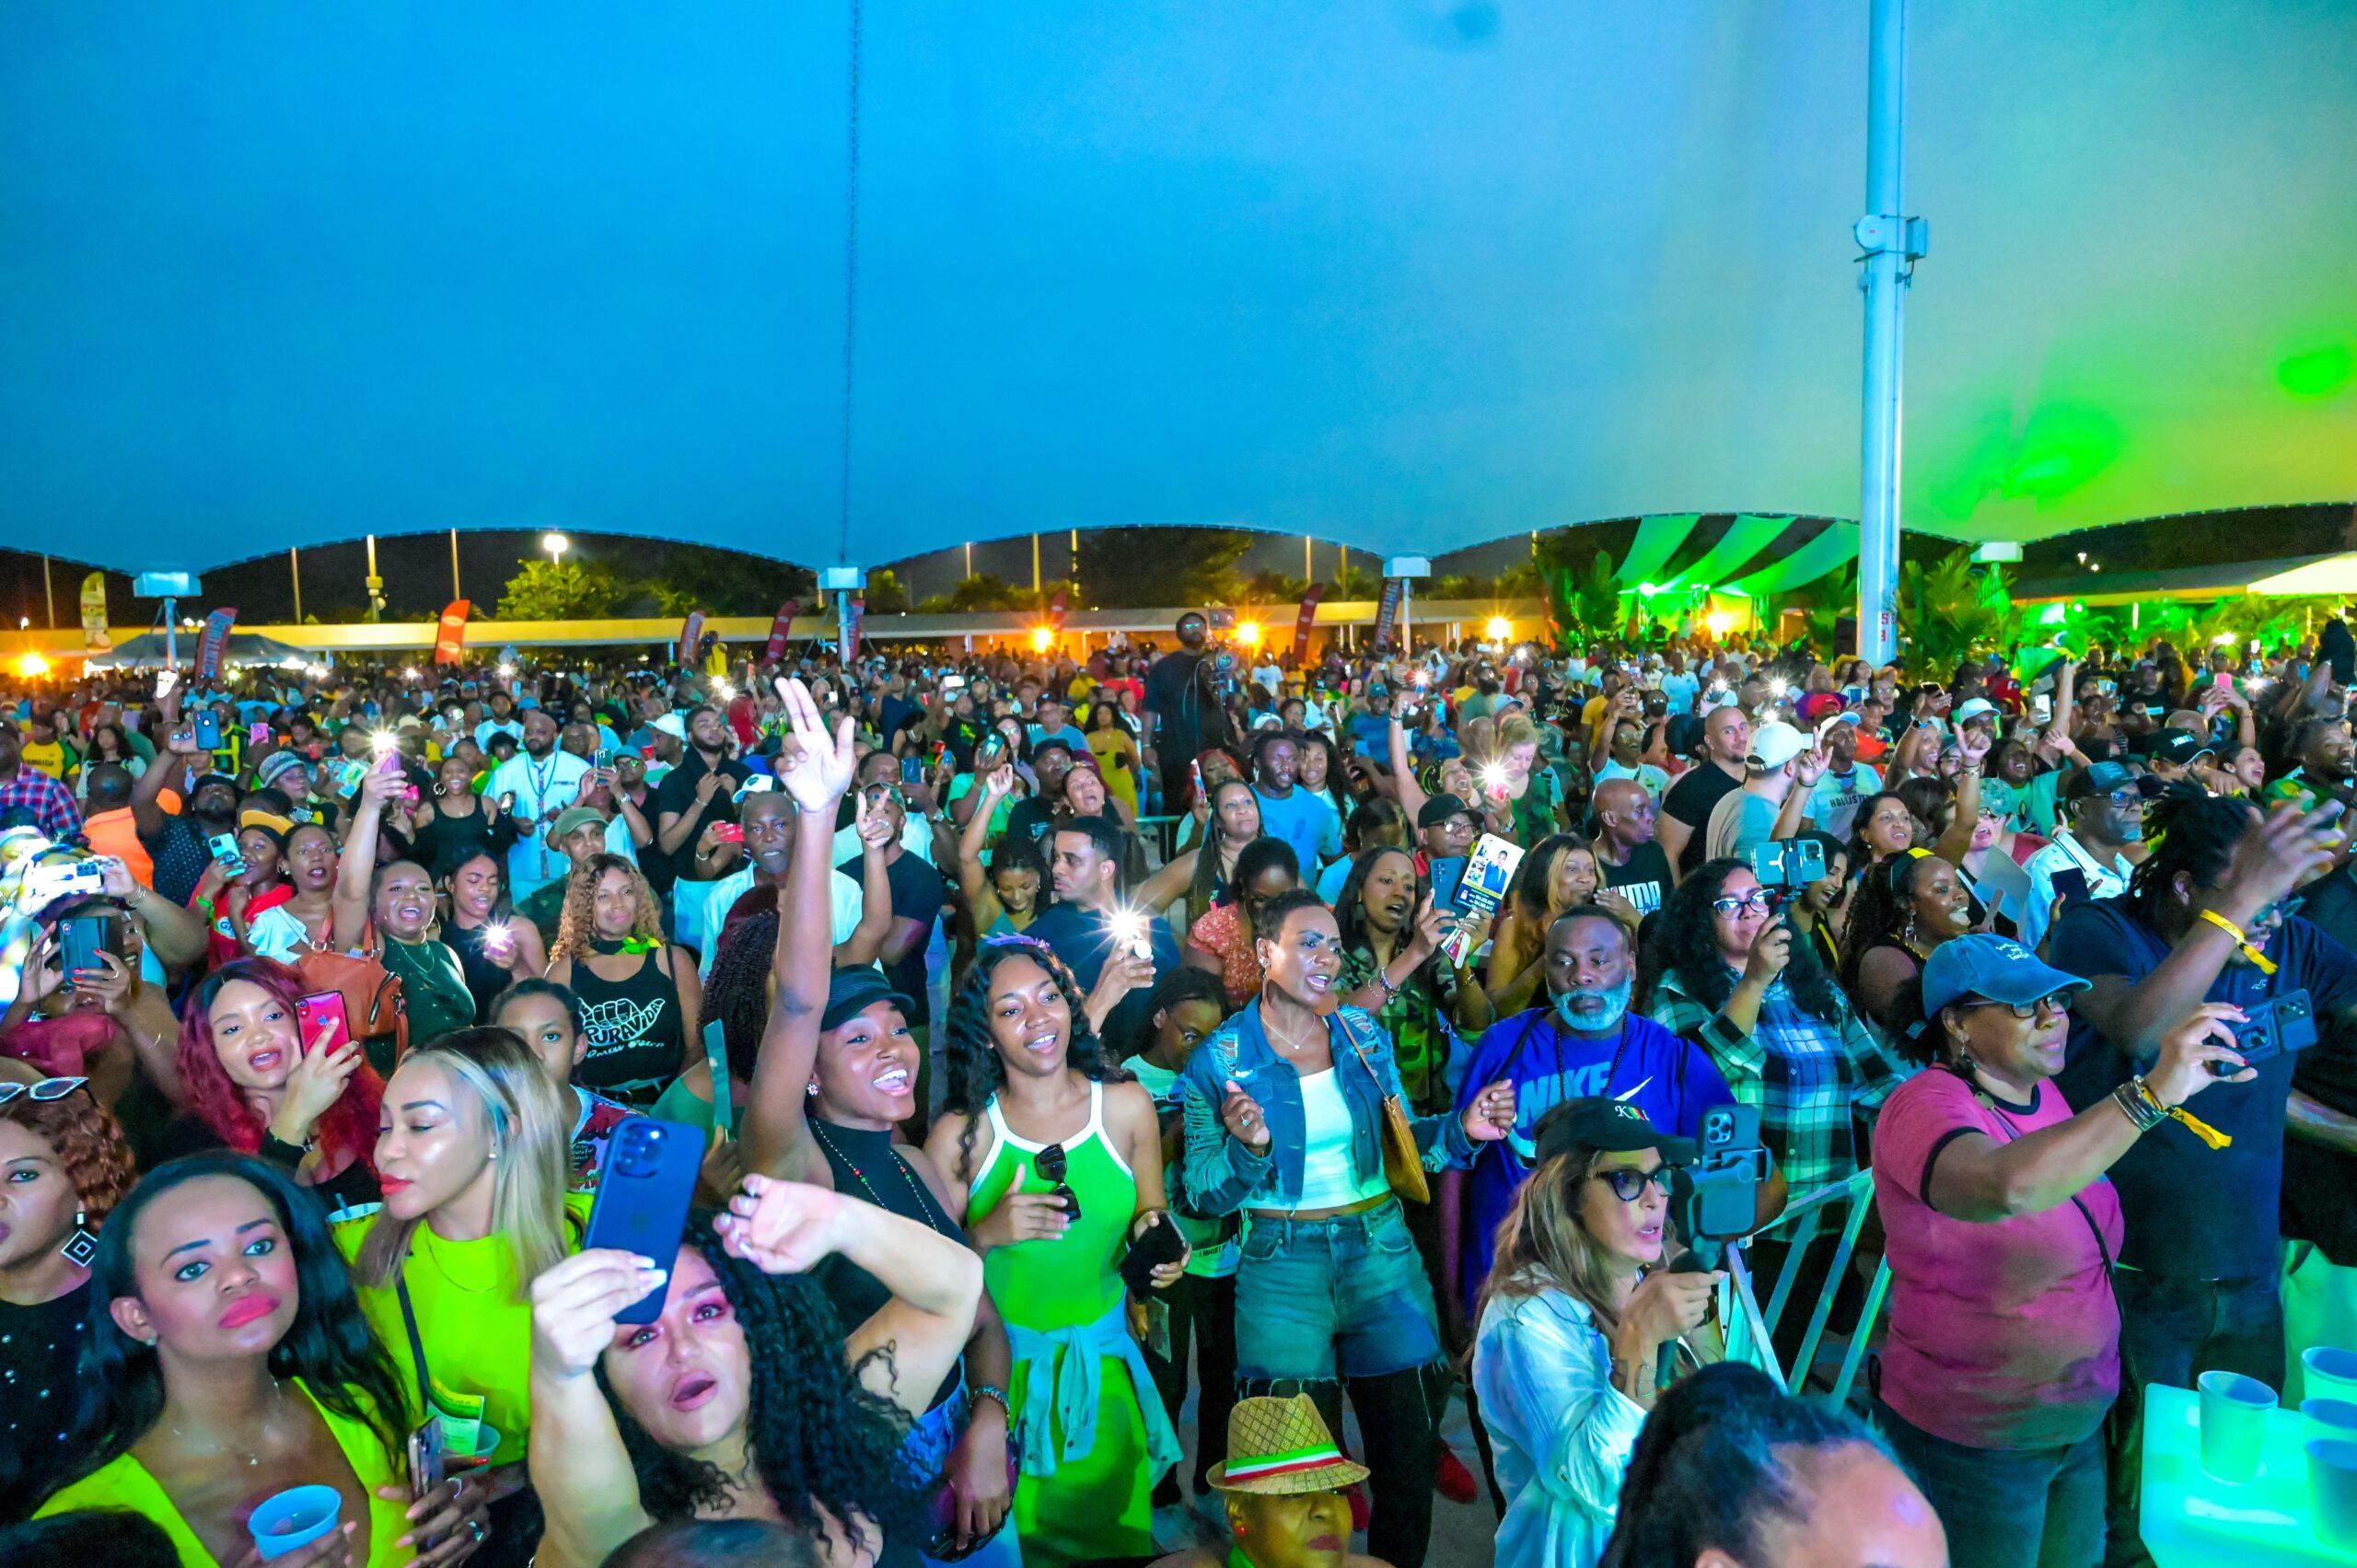 12th Annual Brazilian Festival na Florida - Acontece